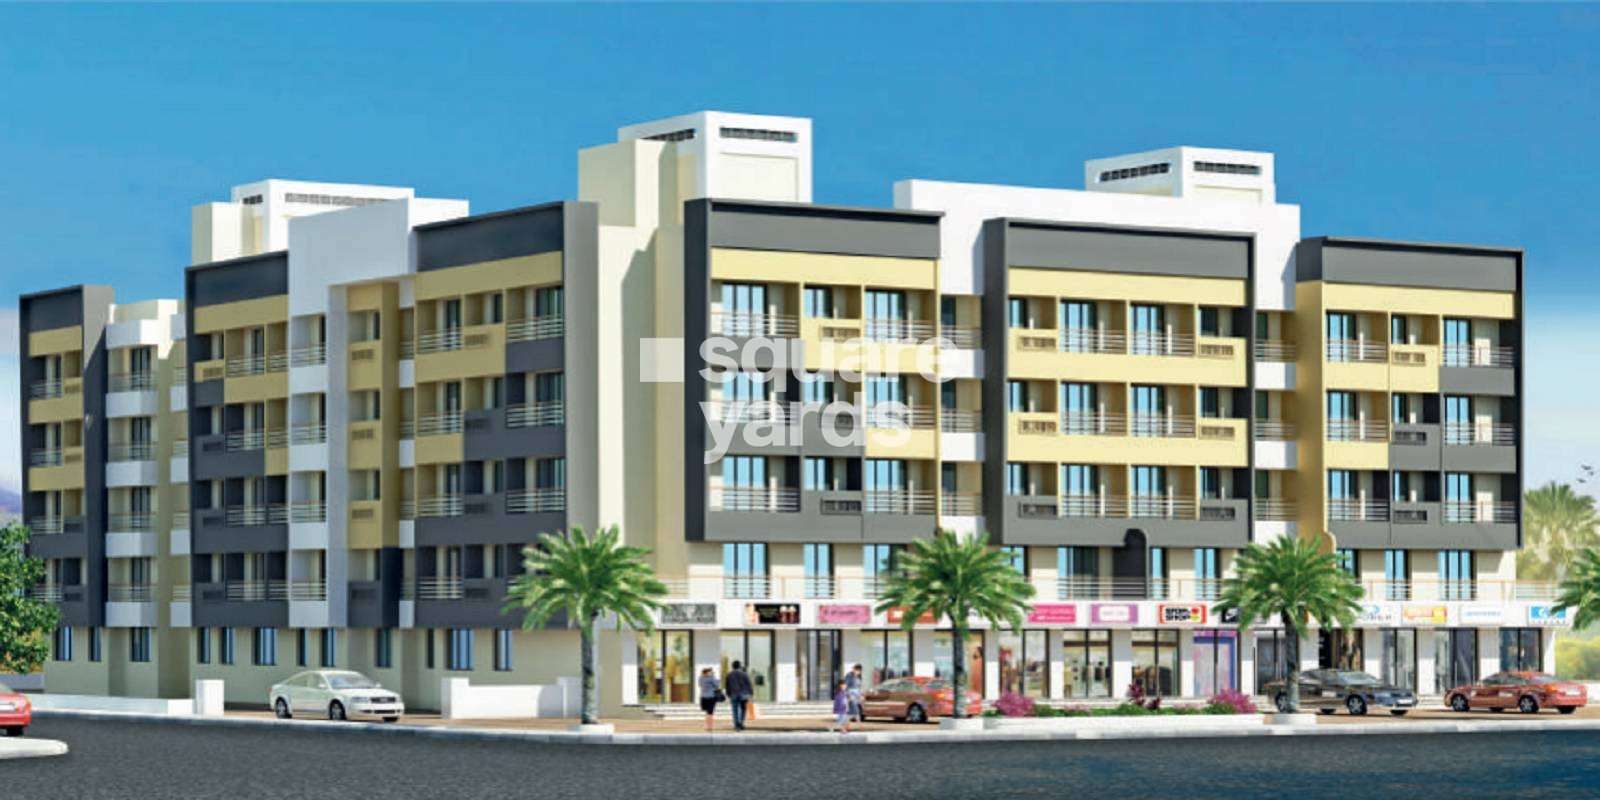 Baba Mithila Apartments Cover Image